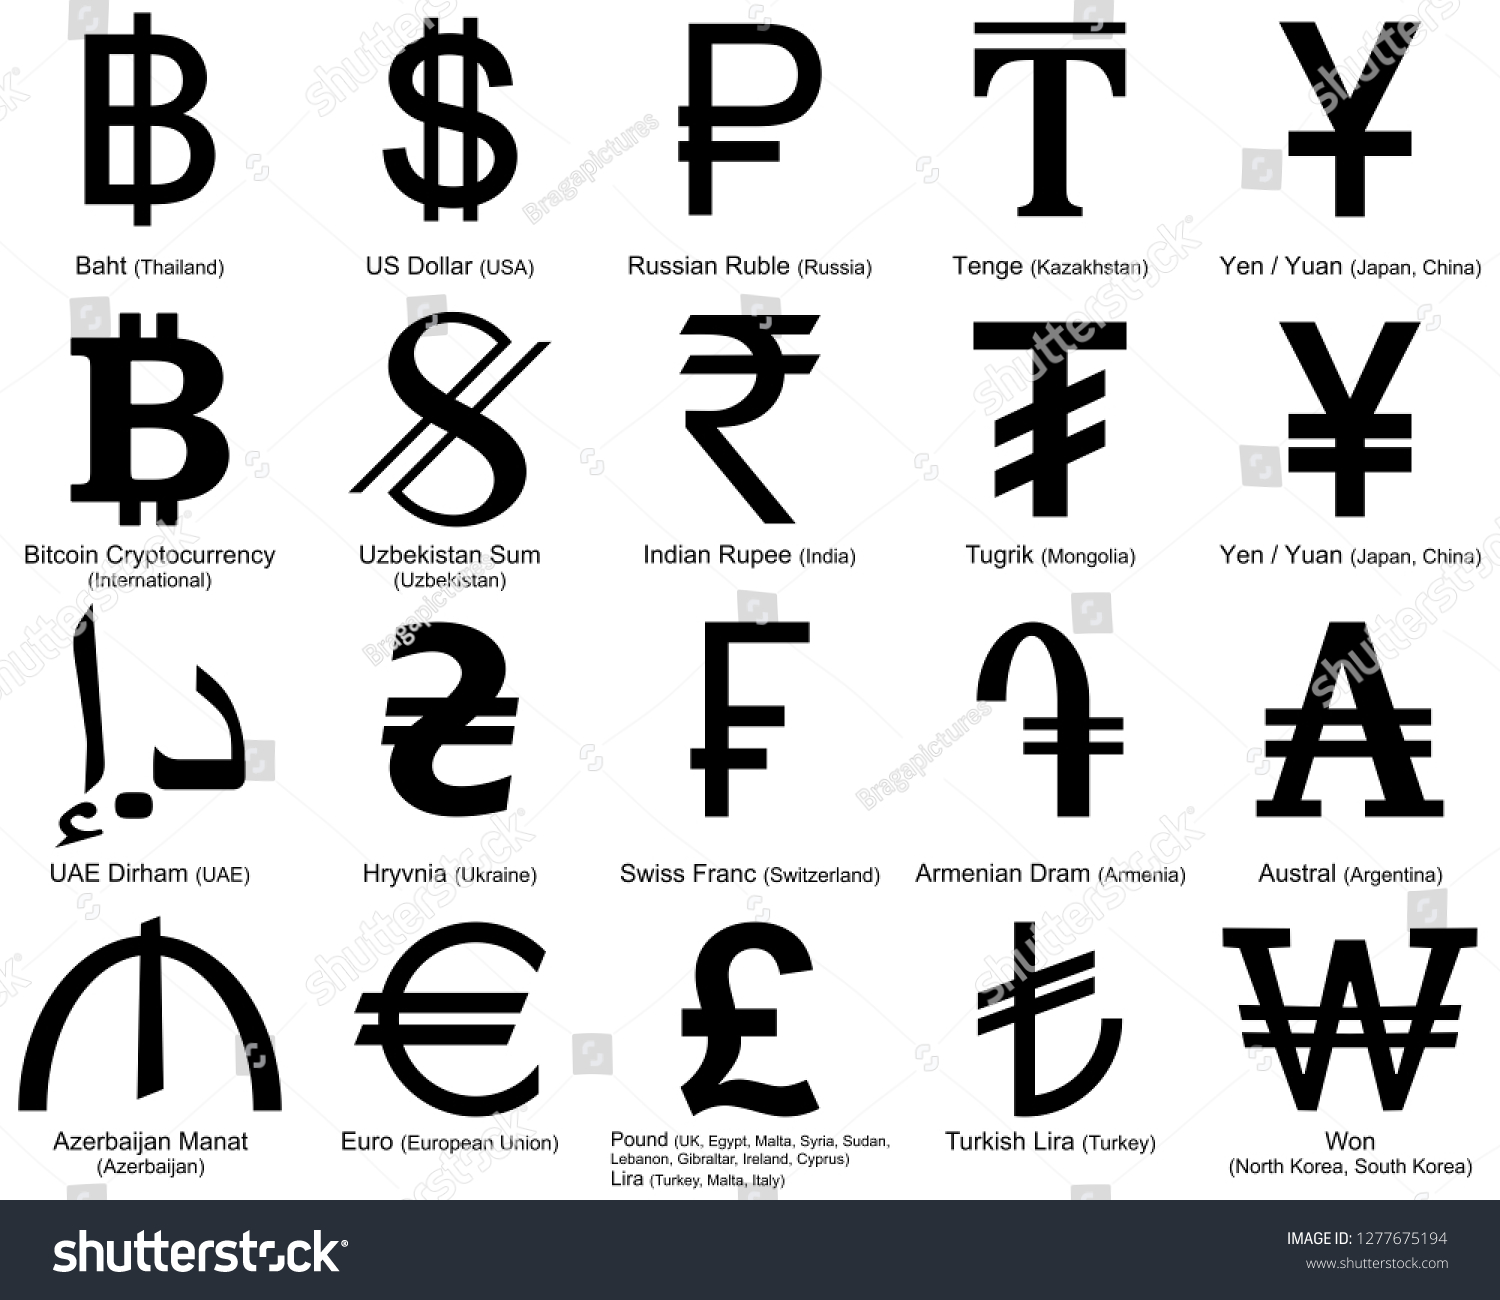 Как называют знак в разных странах. Символы валют. Знаки валют символы. Символы валют разных стран. Сум знак валюты.